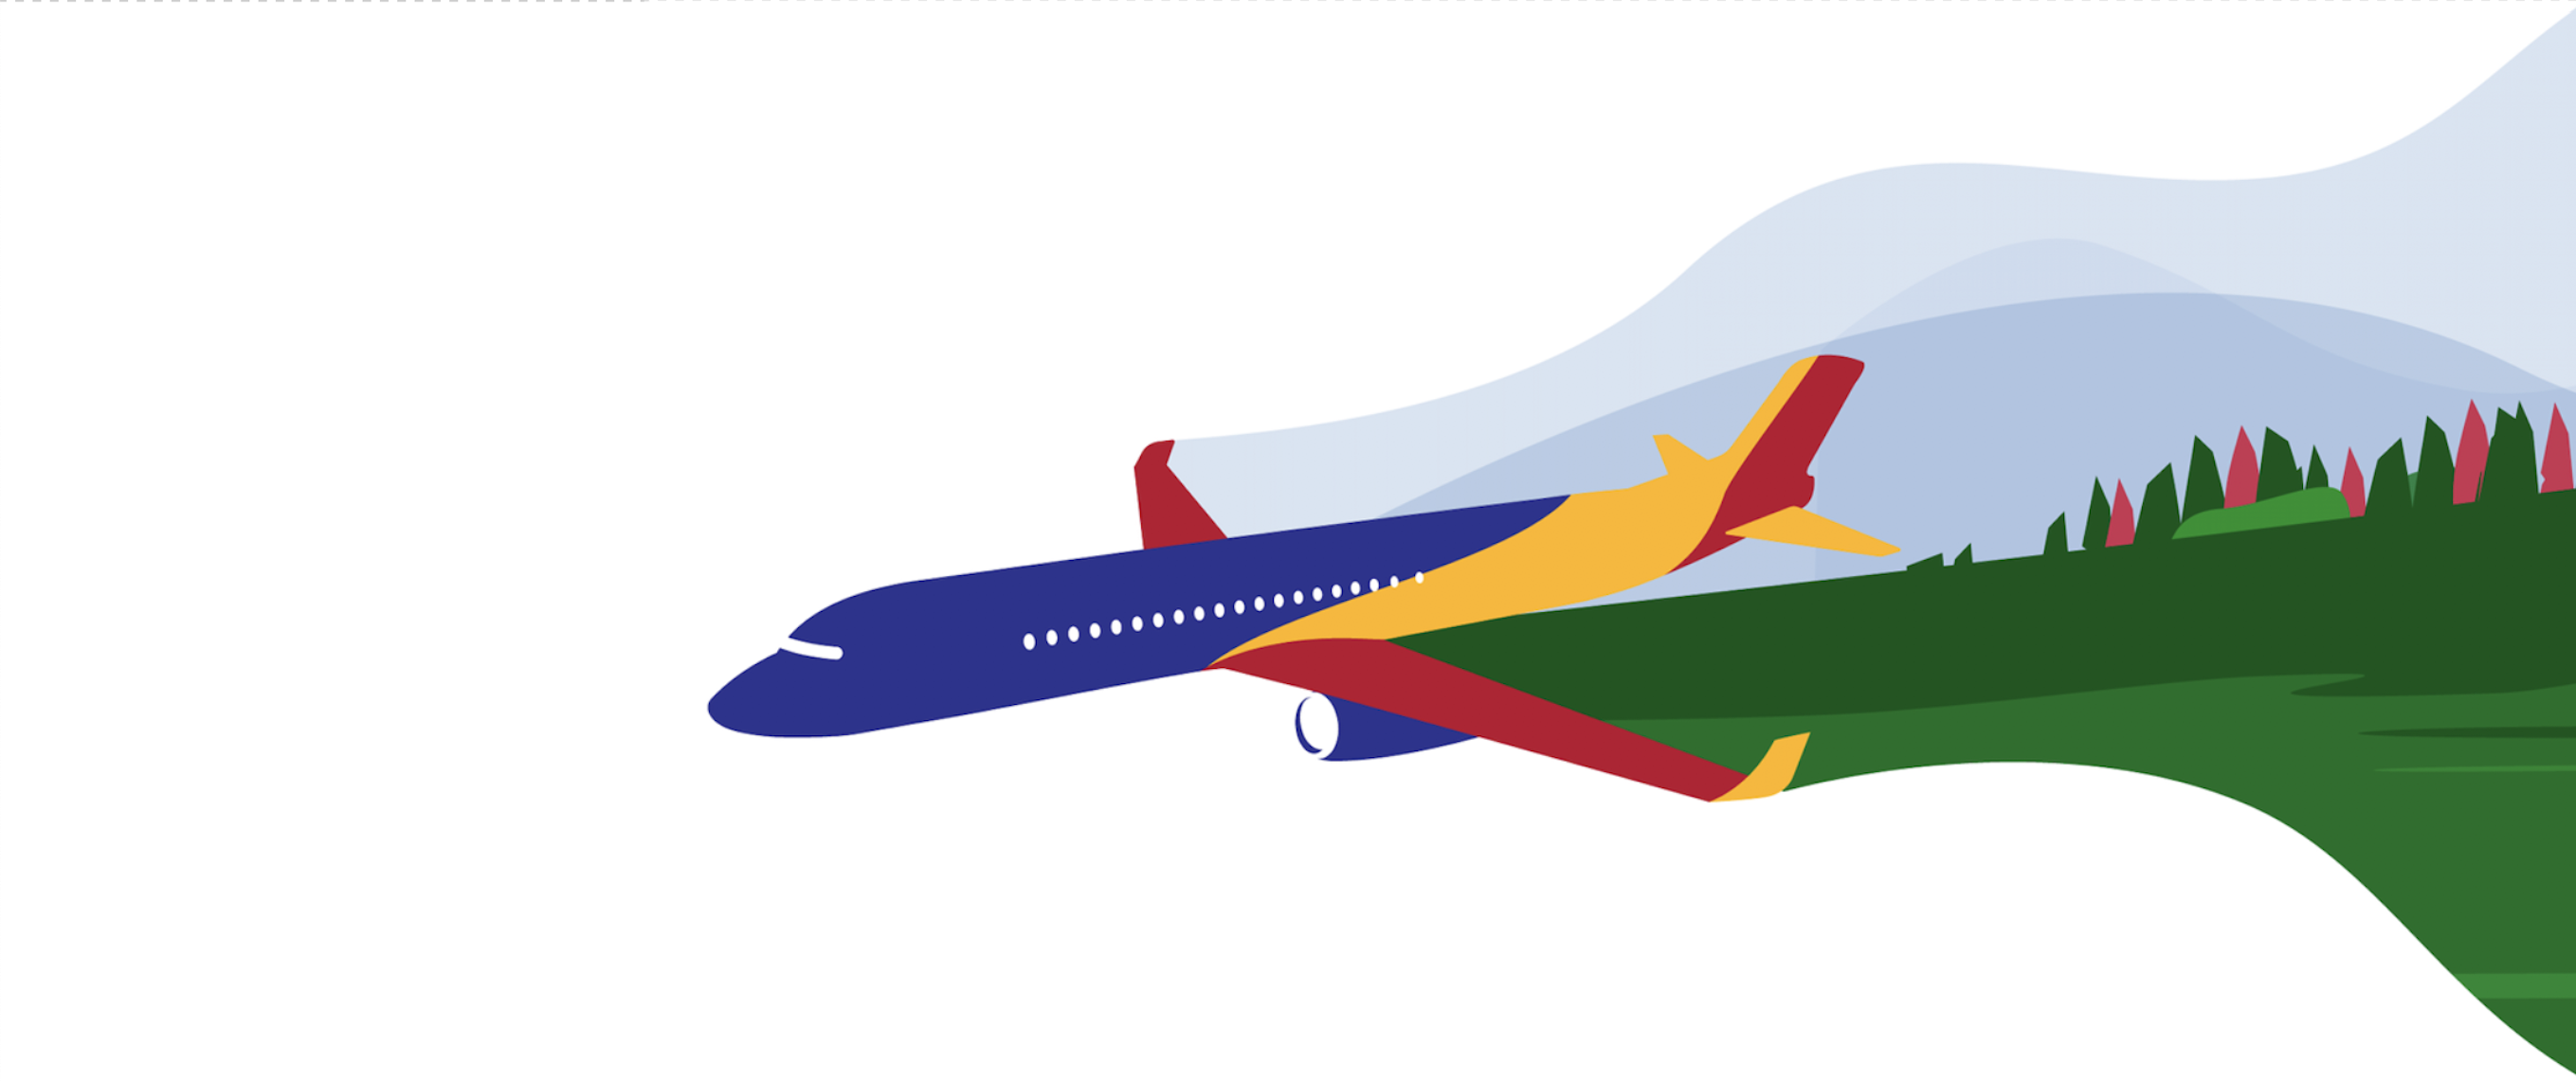 Sideways 6 intrapreneurship examples - Southwest Airlines